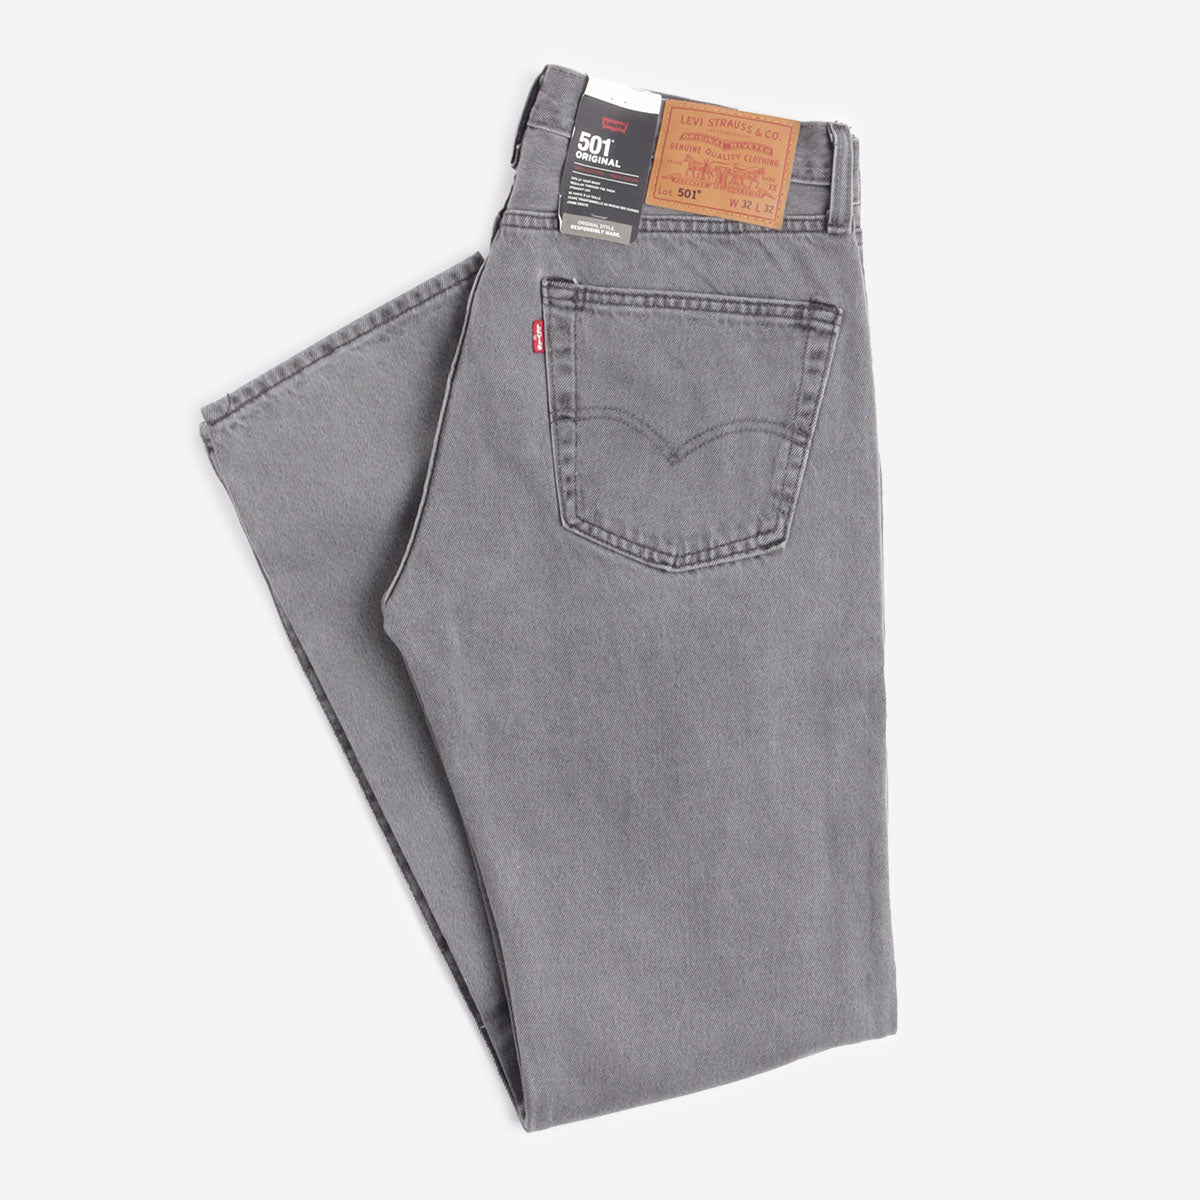 Levis 501 Original Fit Jeans, Walk Down Broadway, Detail Shot 1